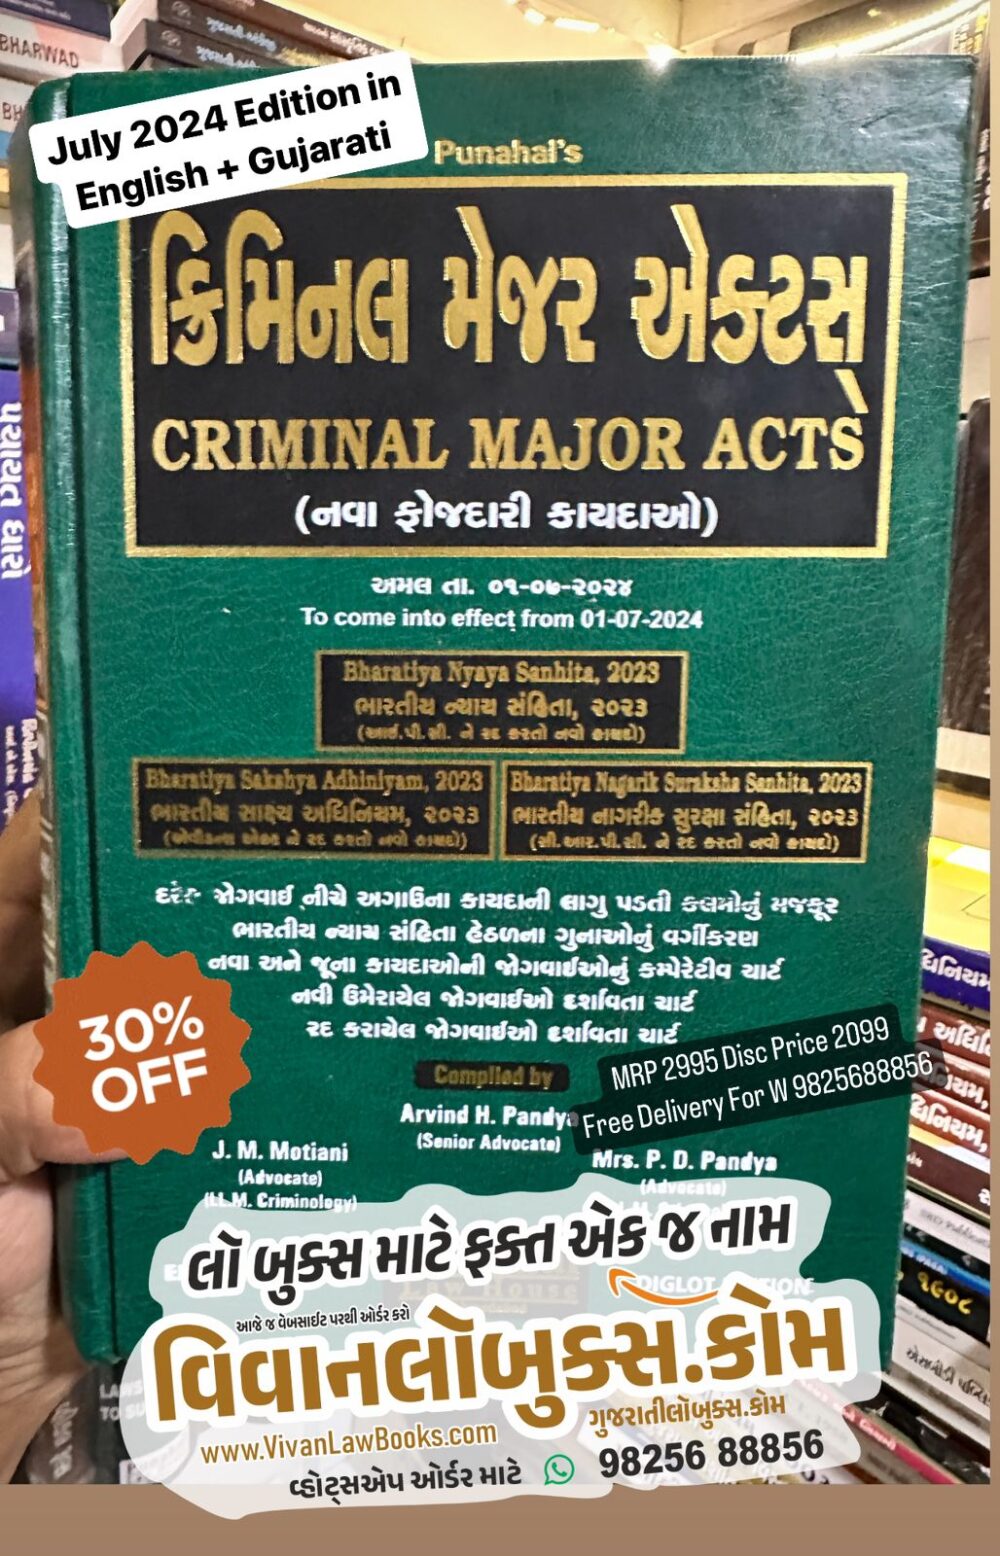 Criminal Major Acts – New Criminal Major Acts (New BNS, BNSS, BSA) in English + Gujarati – Latest July 2024 Edition (Hardbound) Punahal